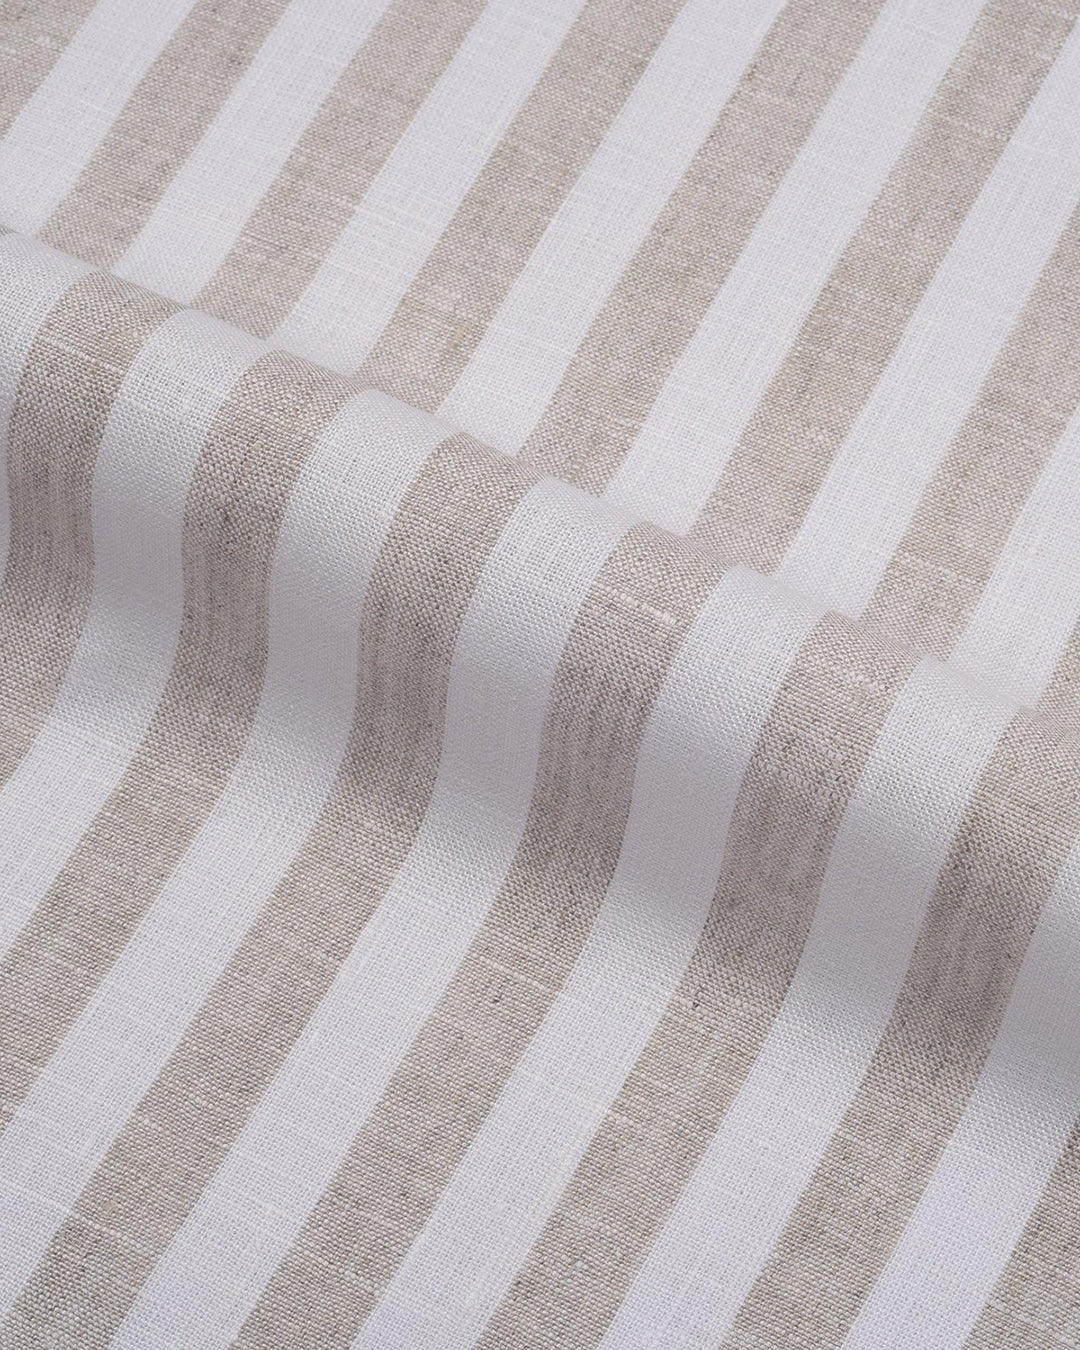 Summer Shirt in Sand White Awning Stripes Linen PRESET STYLE